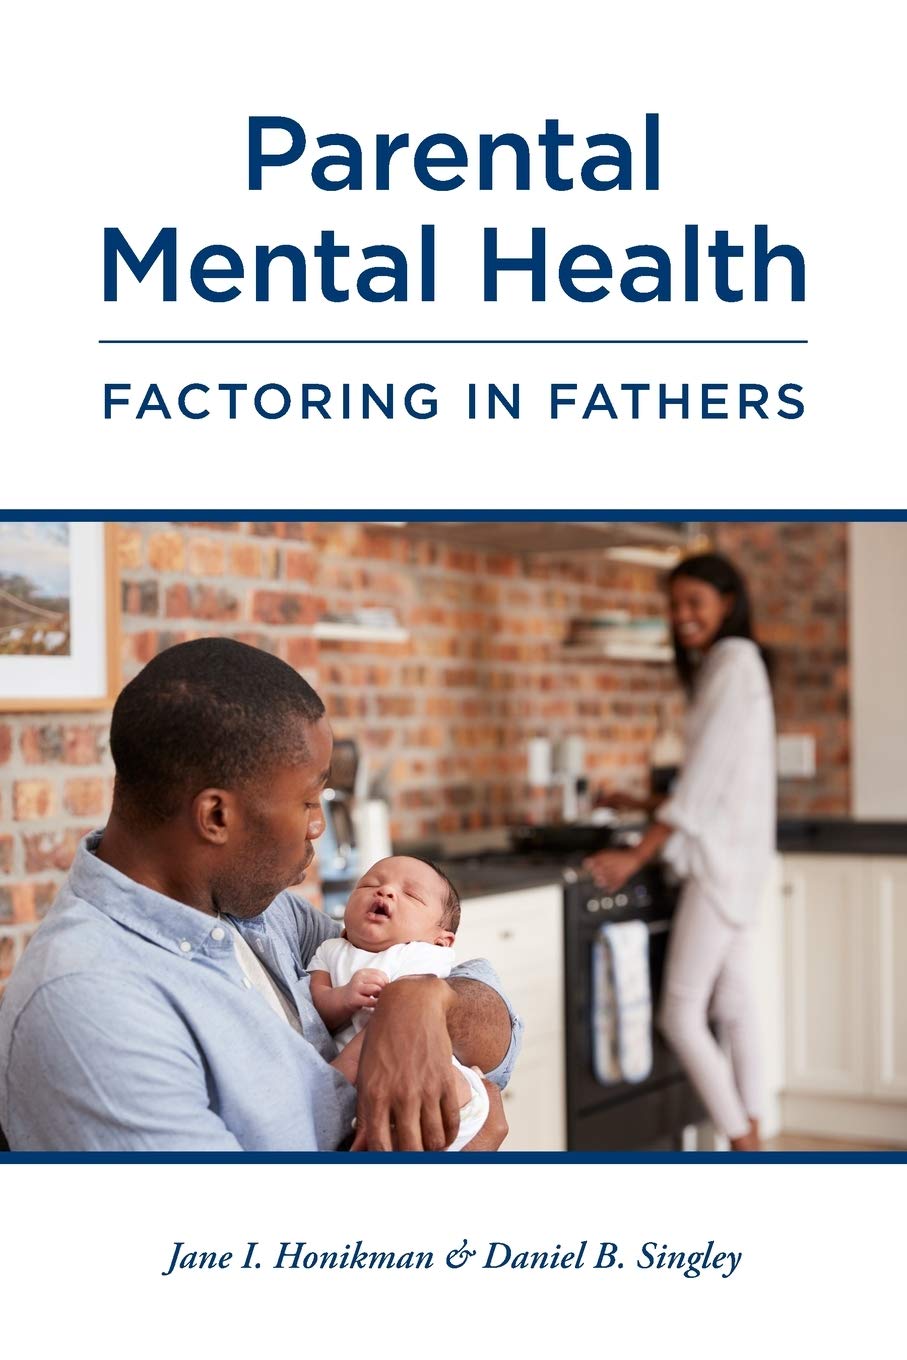 Parental Mental Health: Factoring in Fathers – Jane I. Honikman & Daniel B. Singley